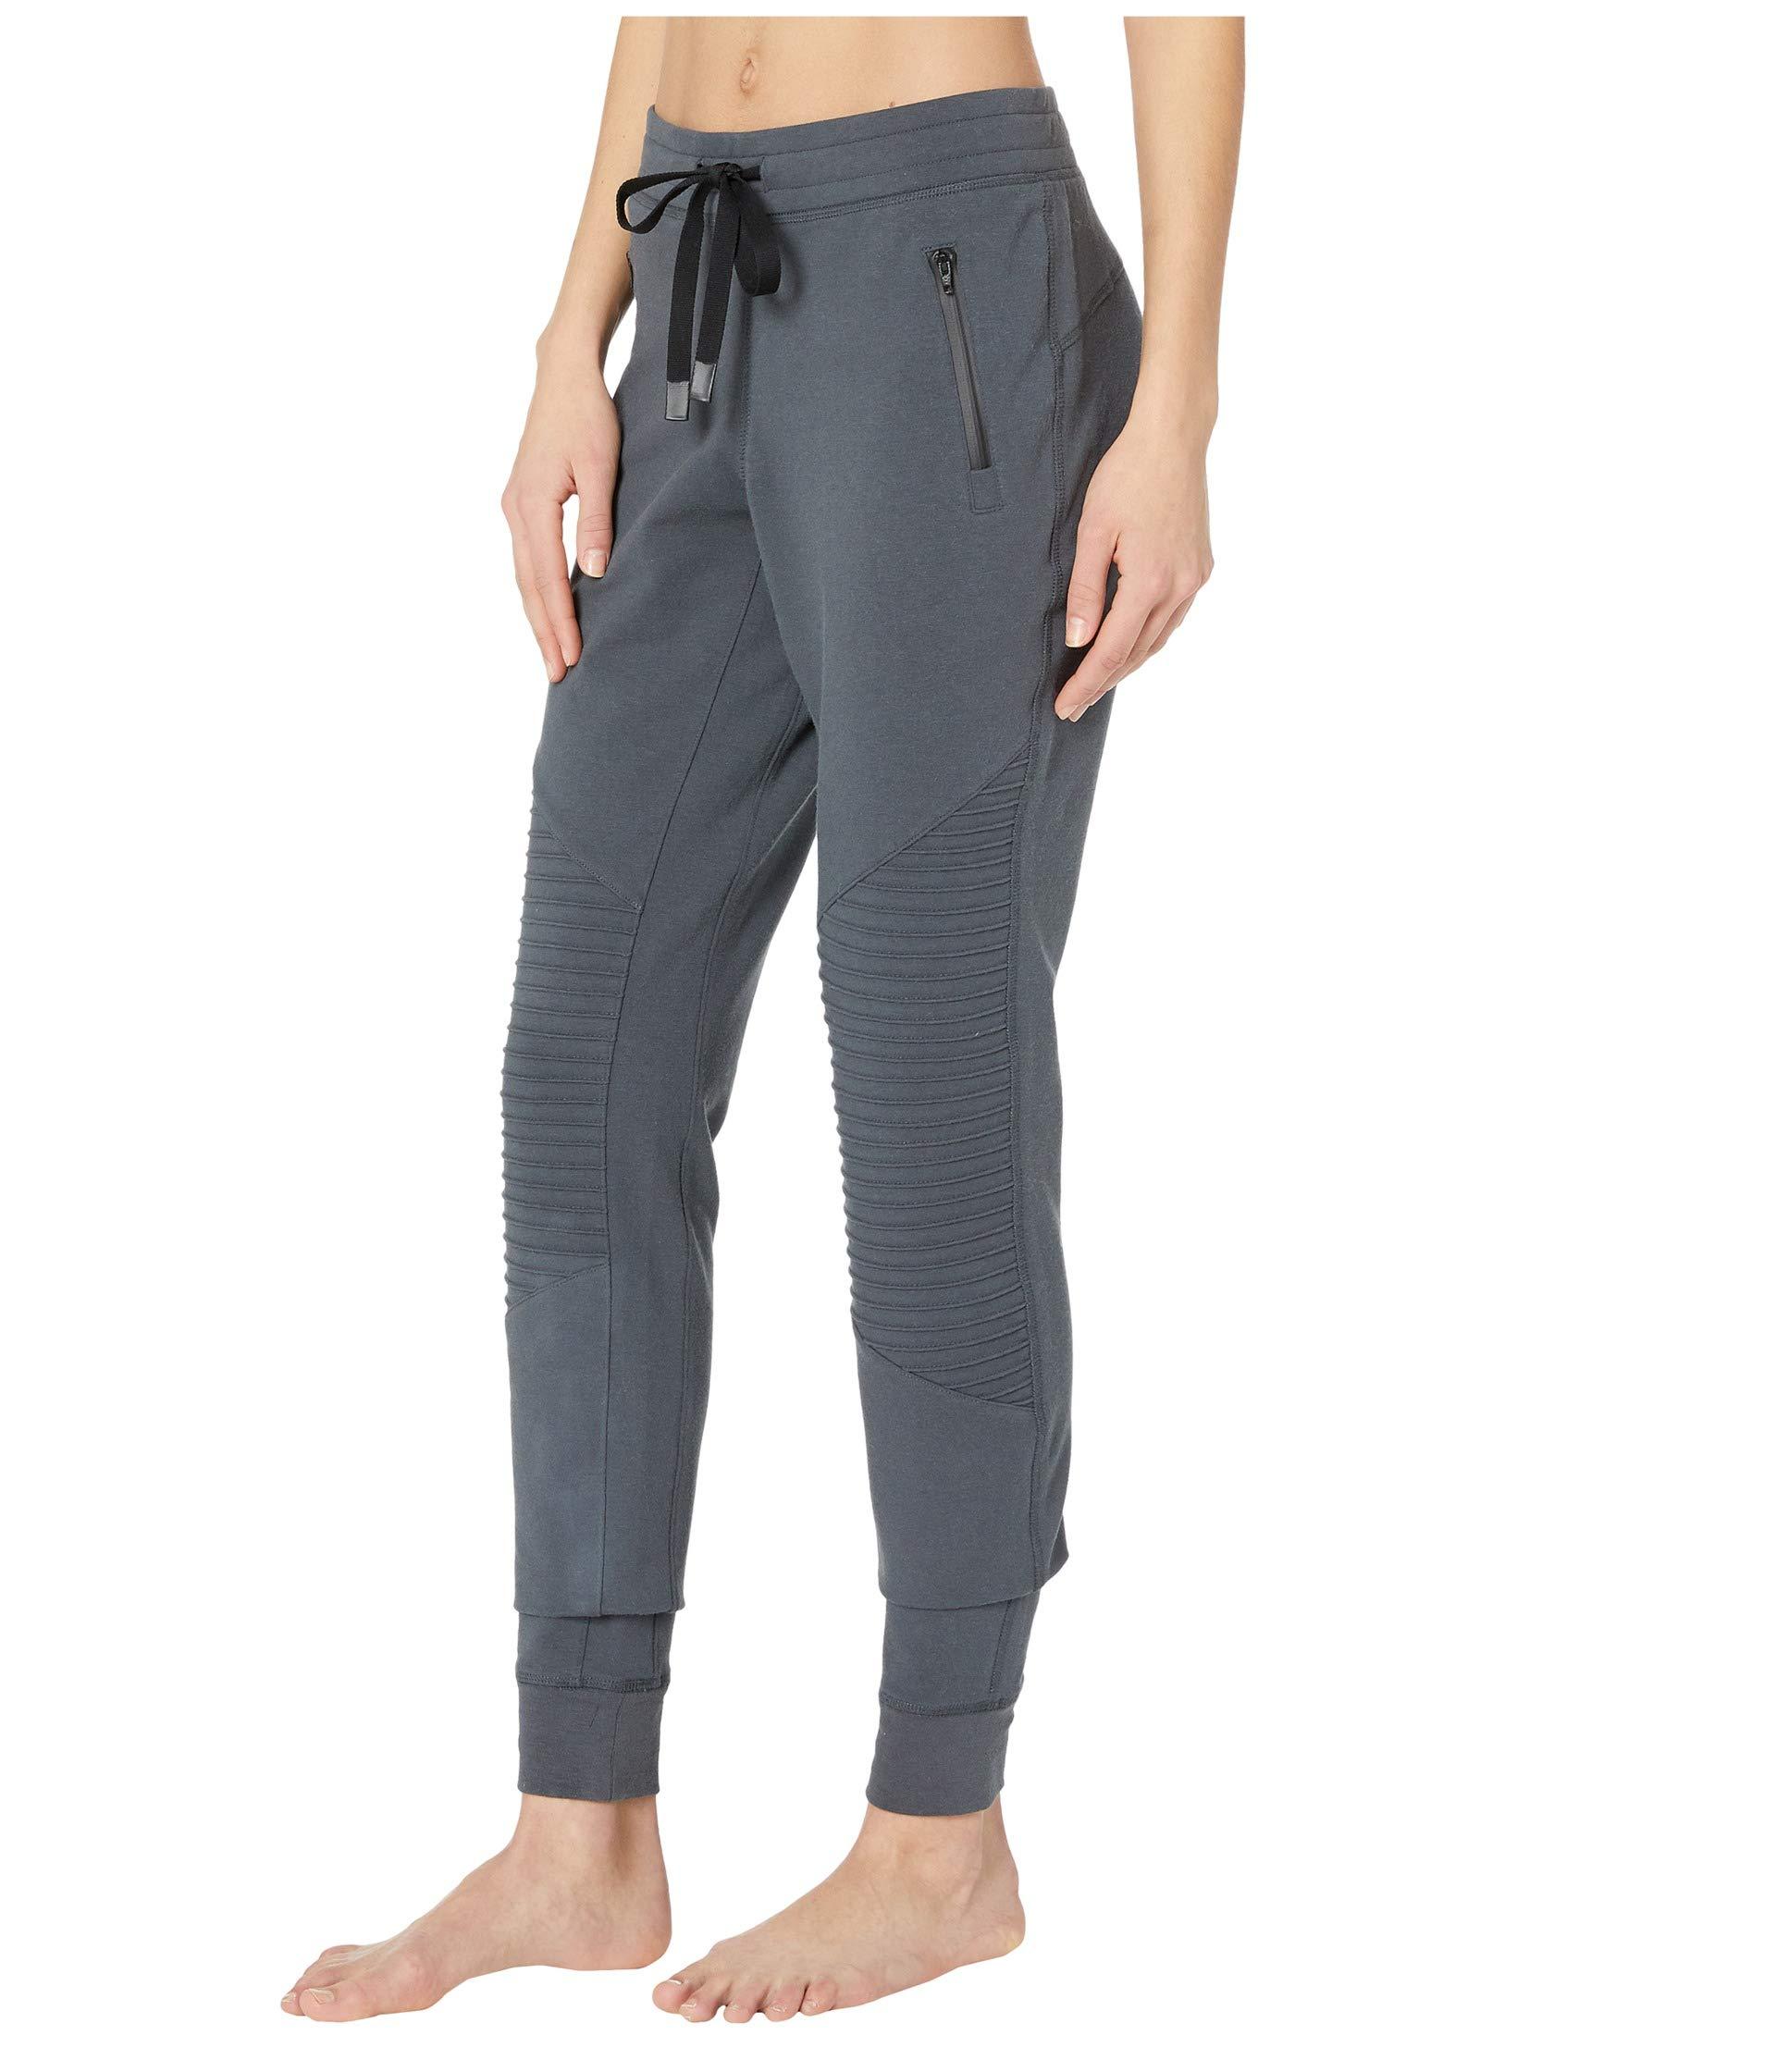 Alo Yoga Urban Moto Sweatpants in Anthracite (Gray) Save